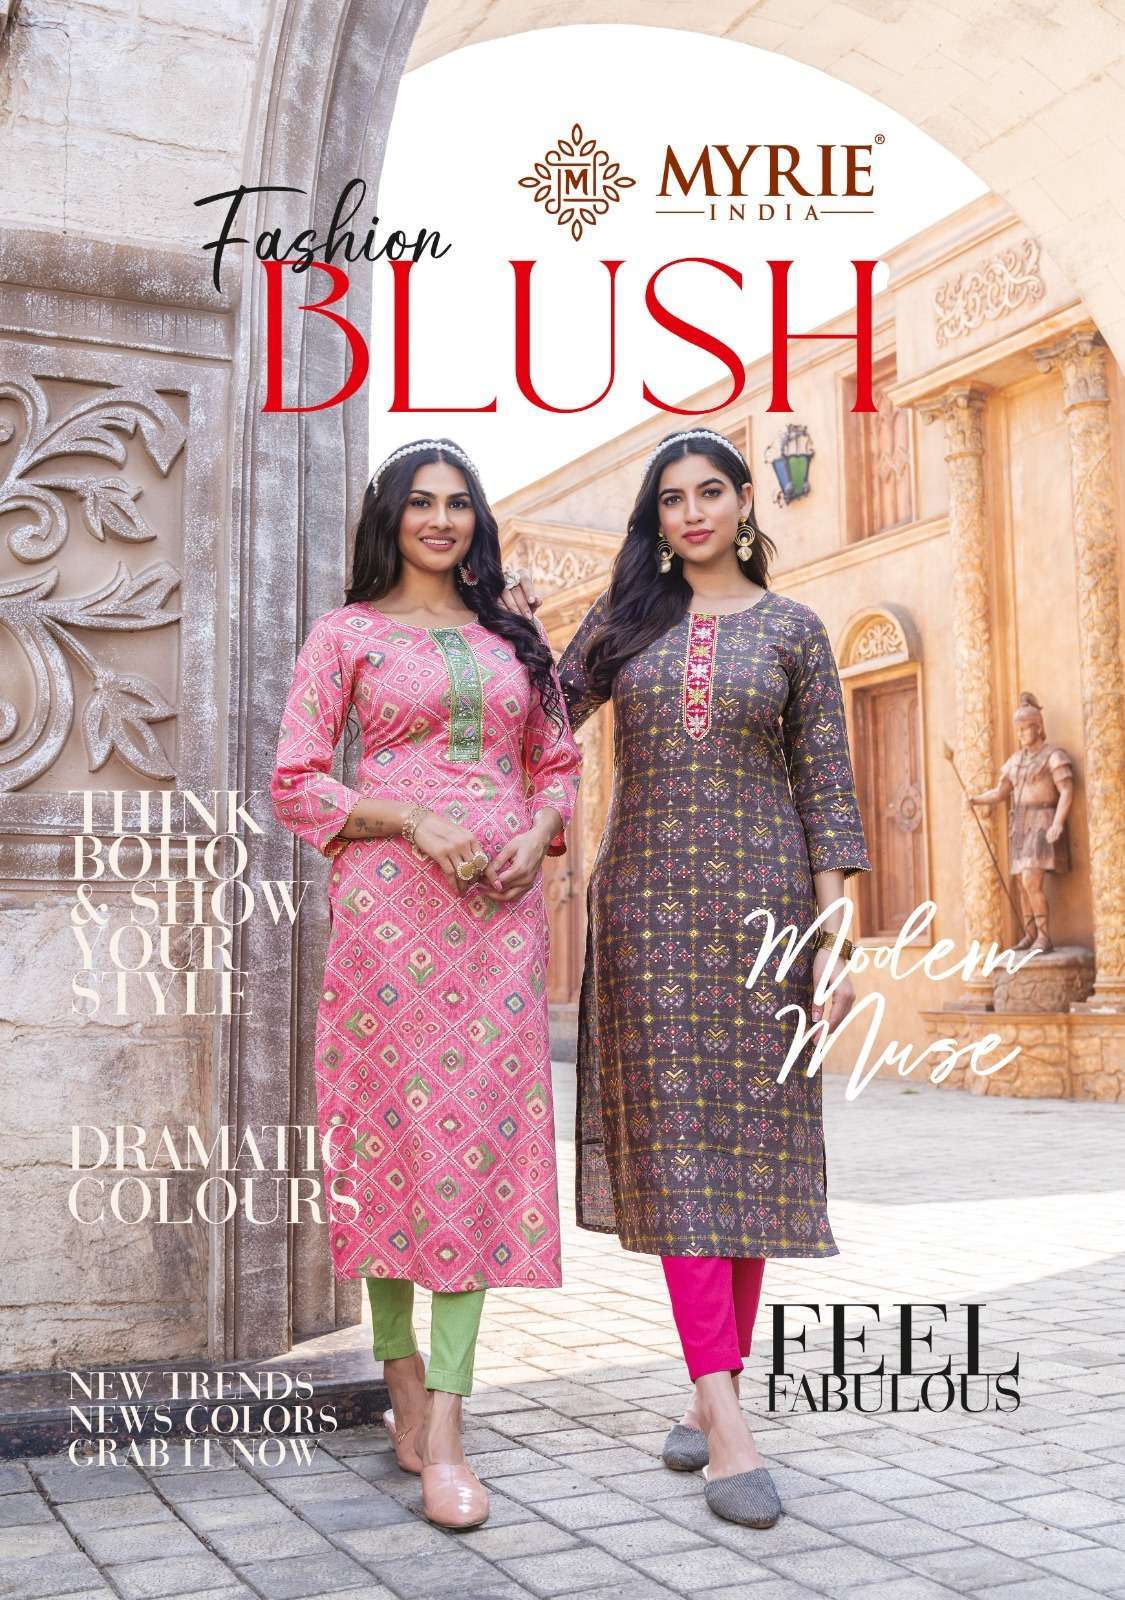 mayree india fashion blush series 101-110 Pure Capsule Printed Kurti 